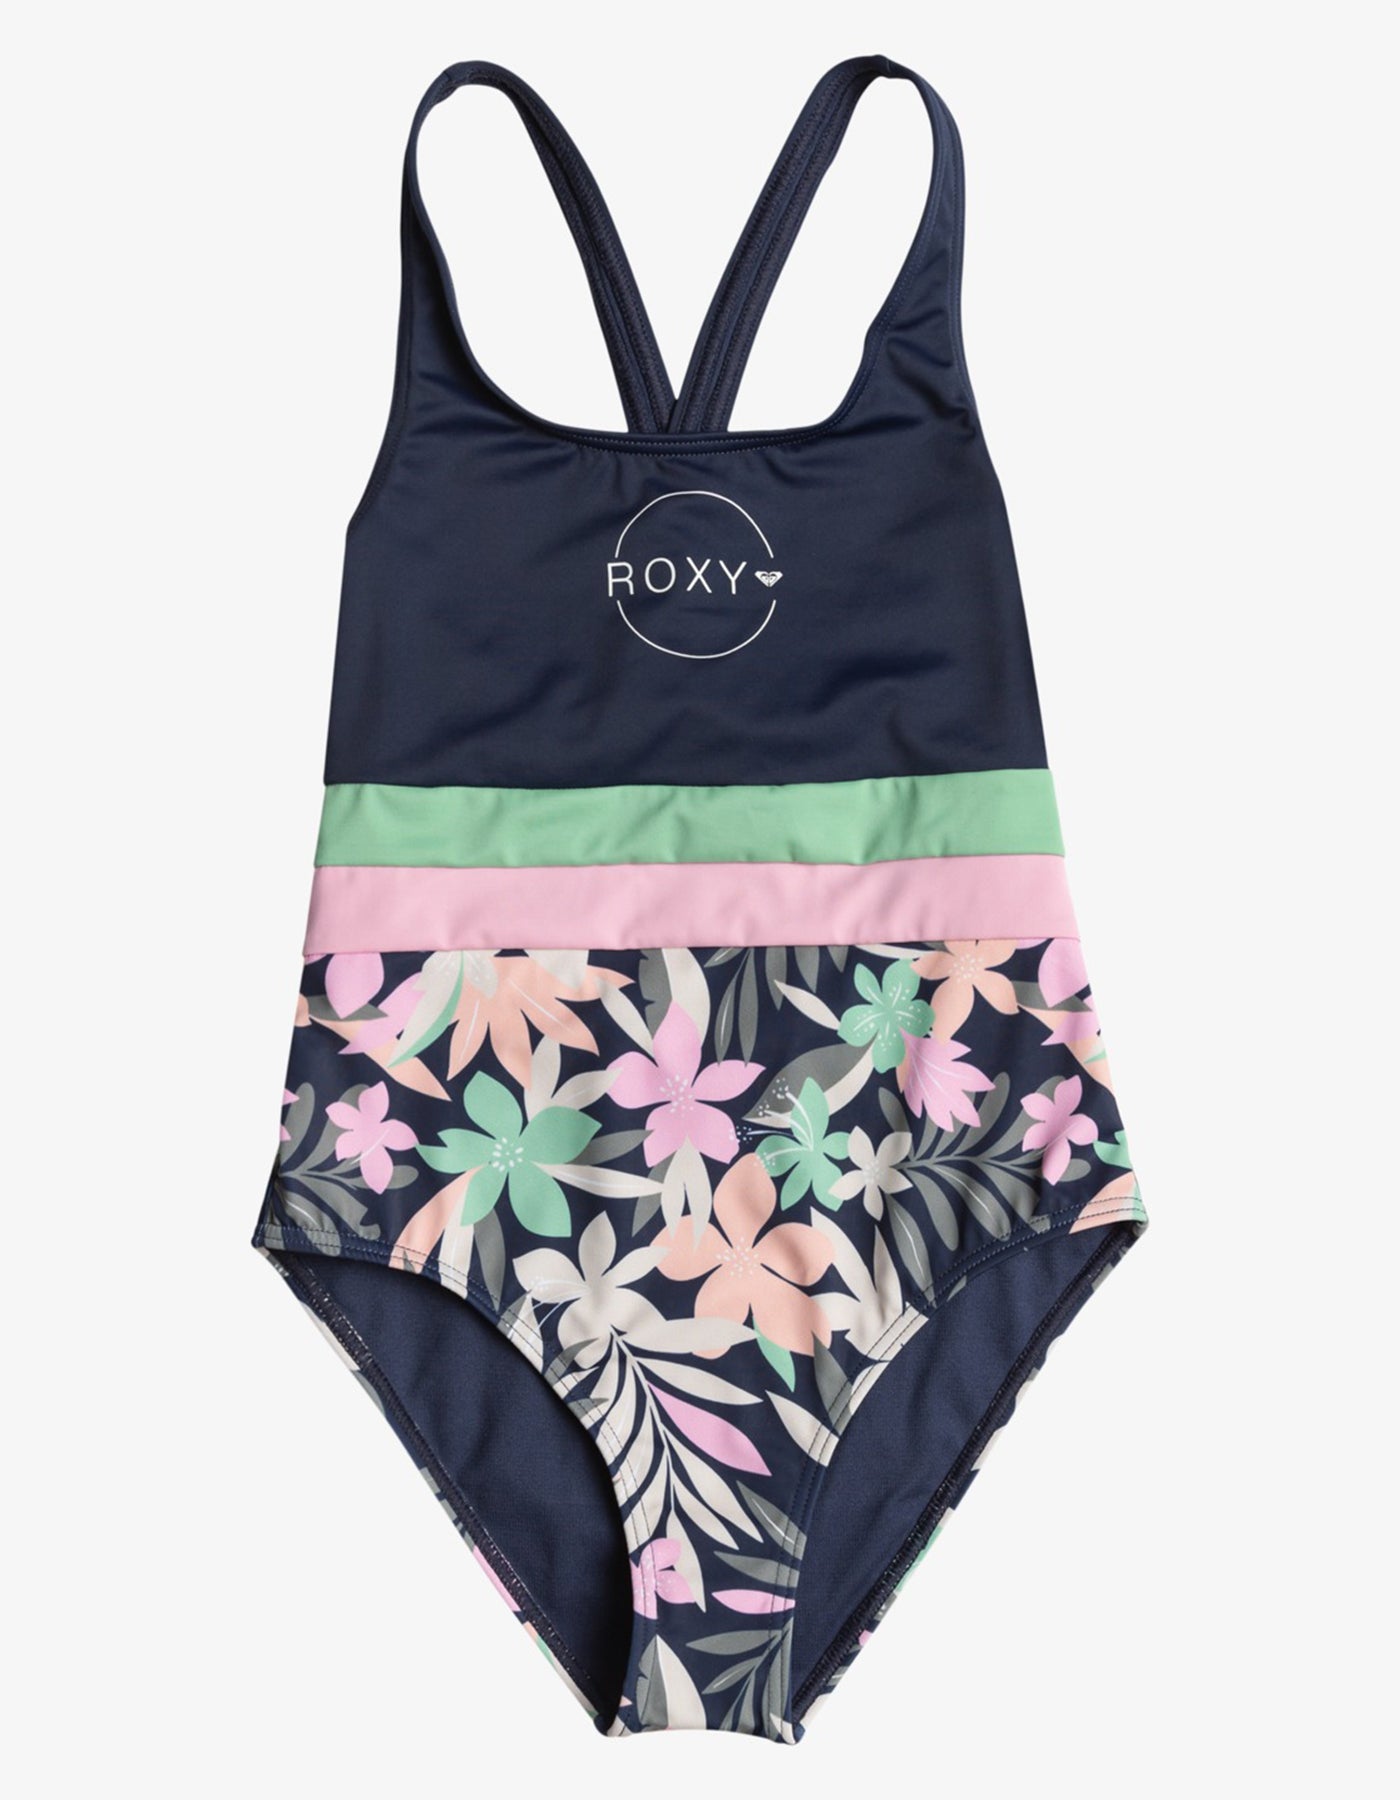 Roxy Girl's Swimwear